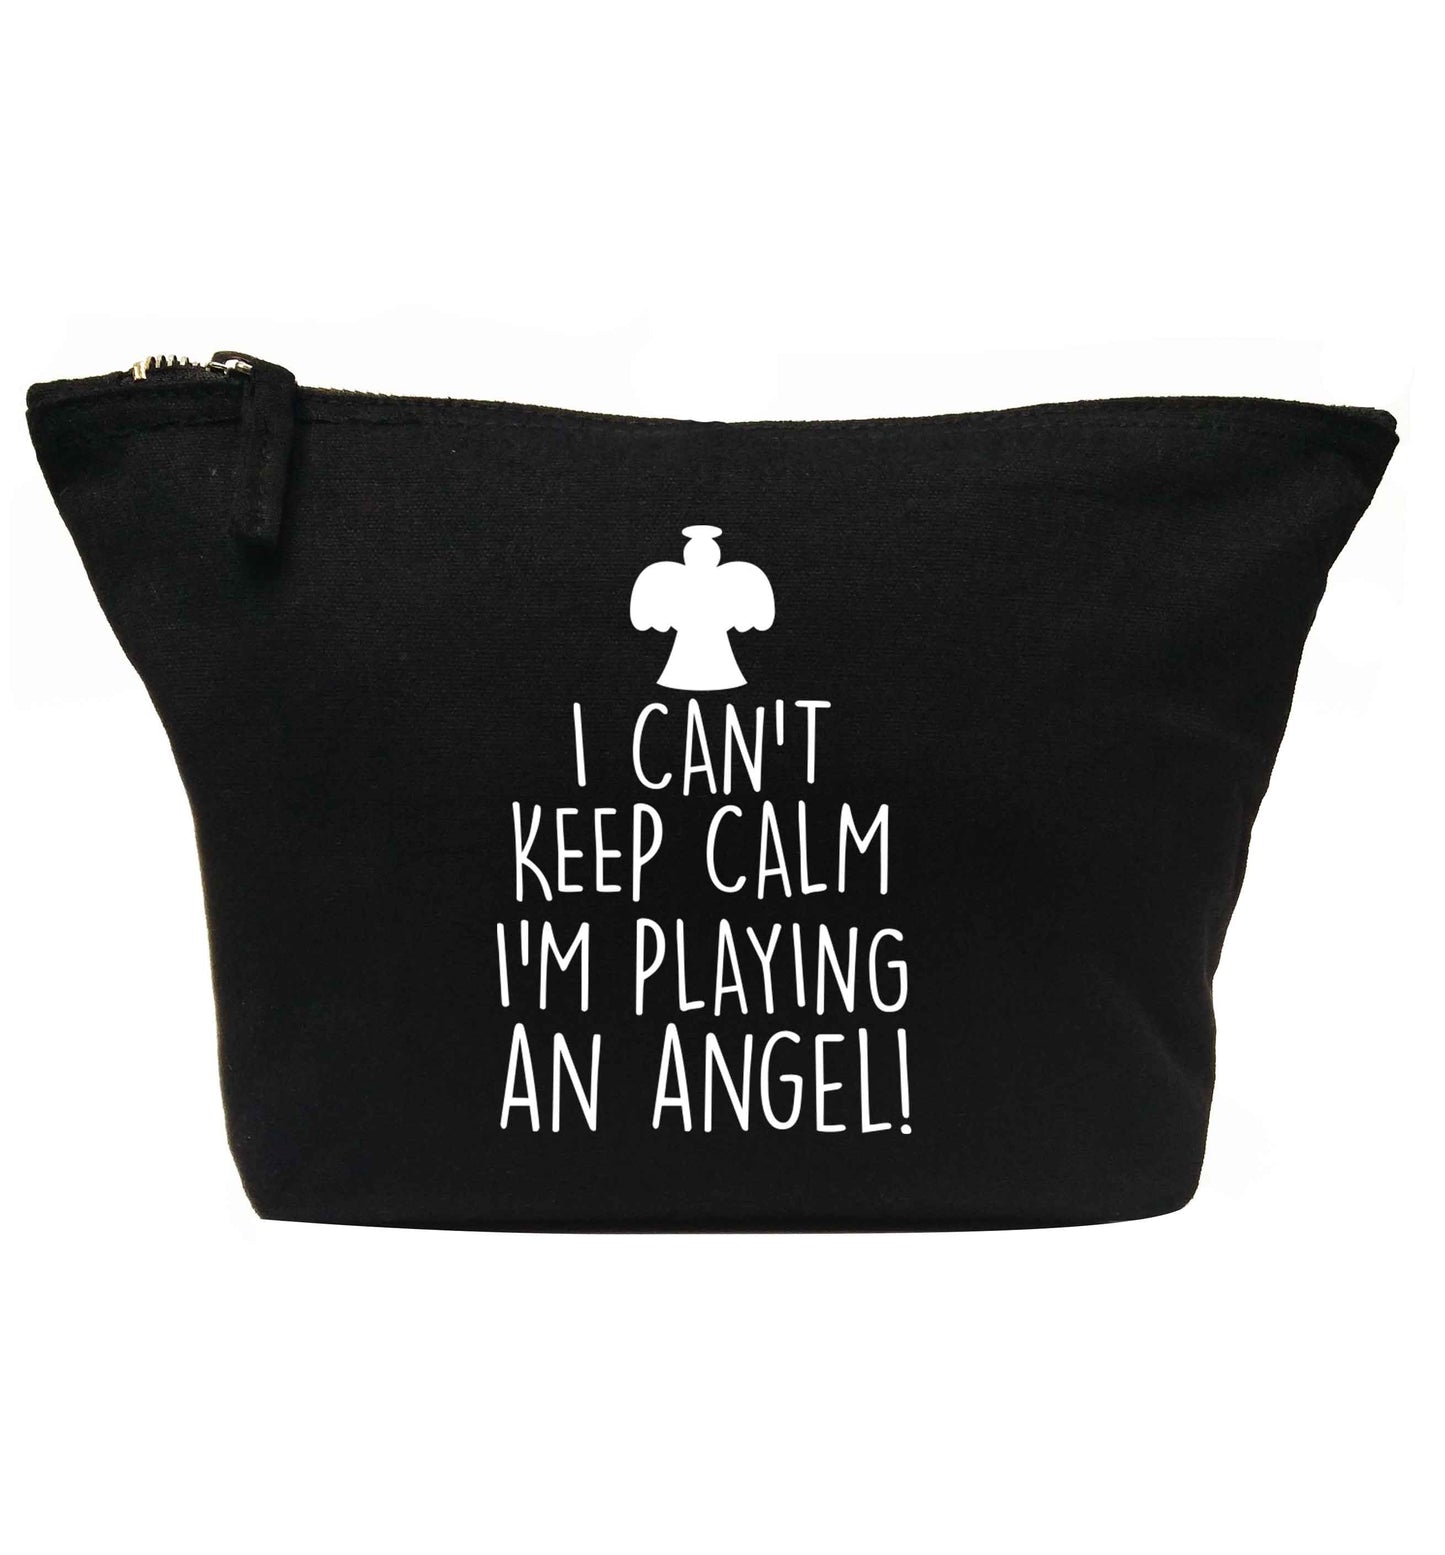 I can't keep calm I'm playing an angel! | makeup / wash bag